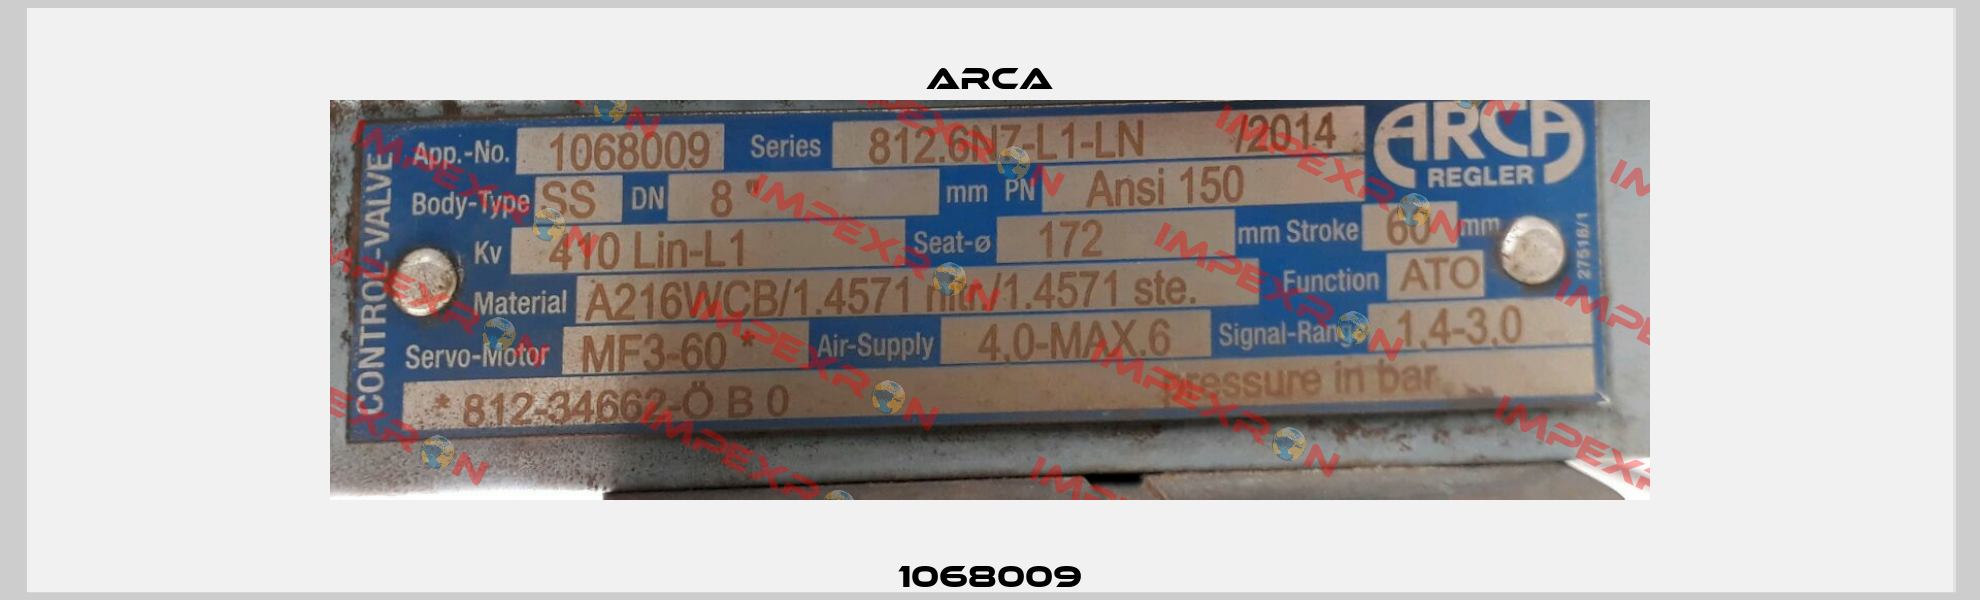 1068009 ARCA